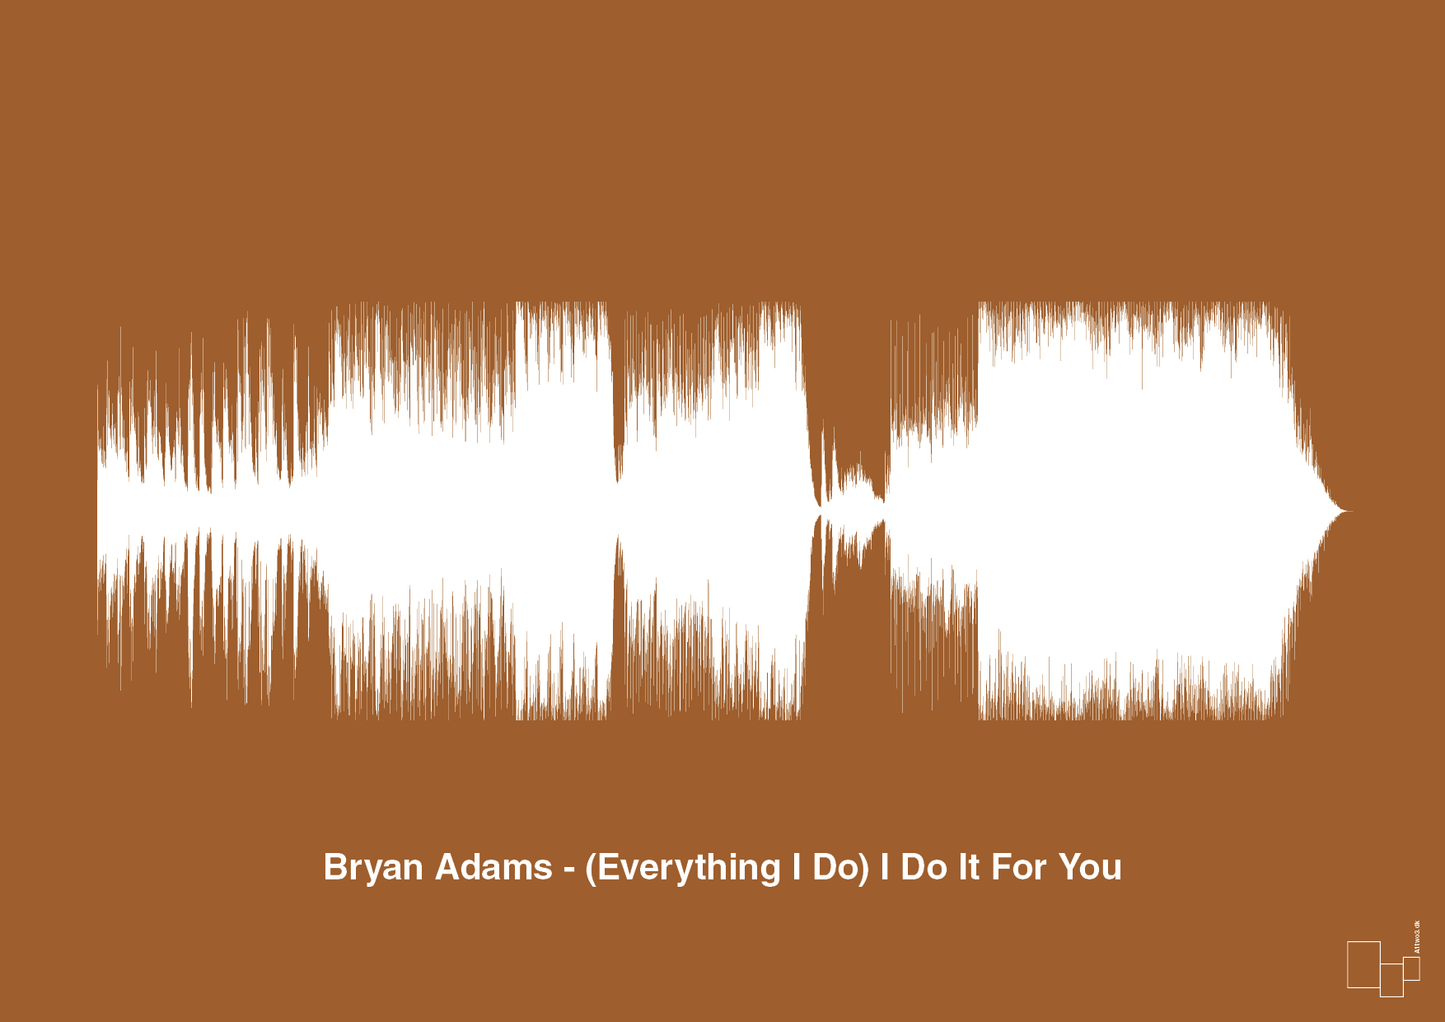 bryan adams - (everything i do) i do it for you - Plakat med Musik i Cognac